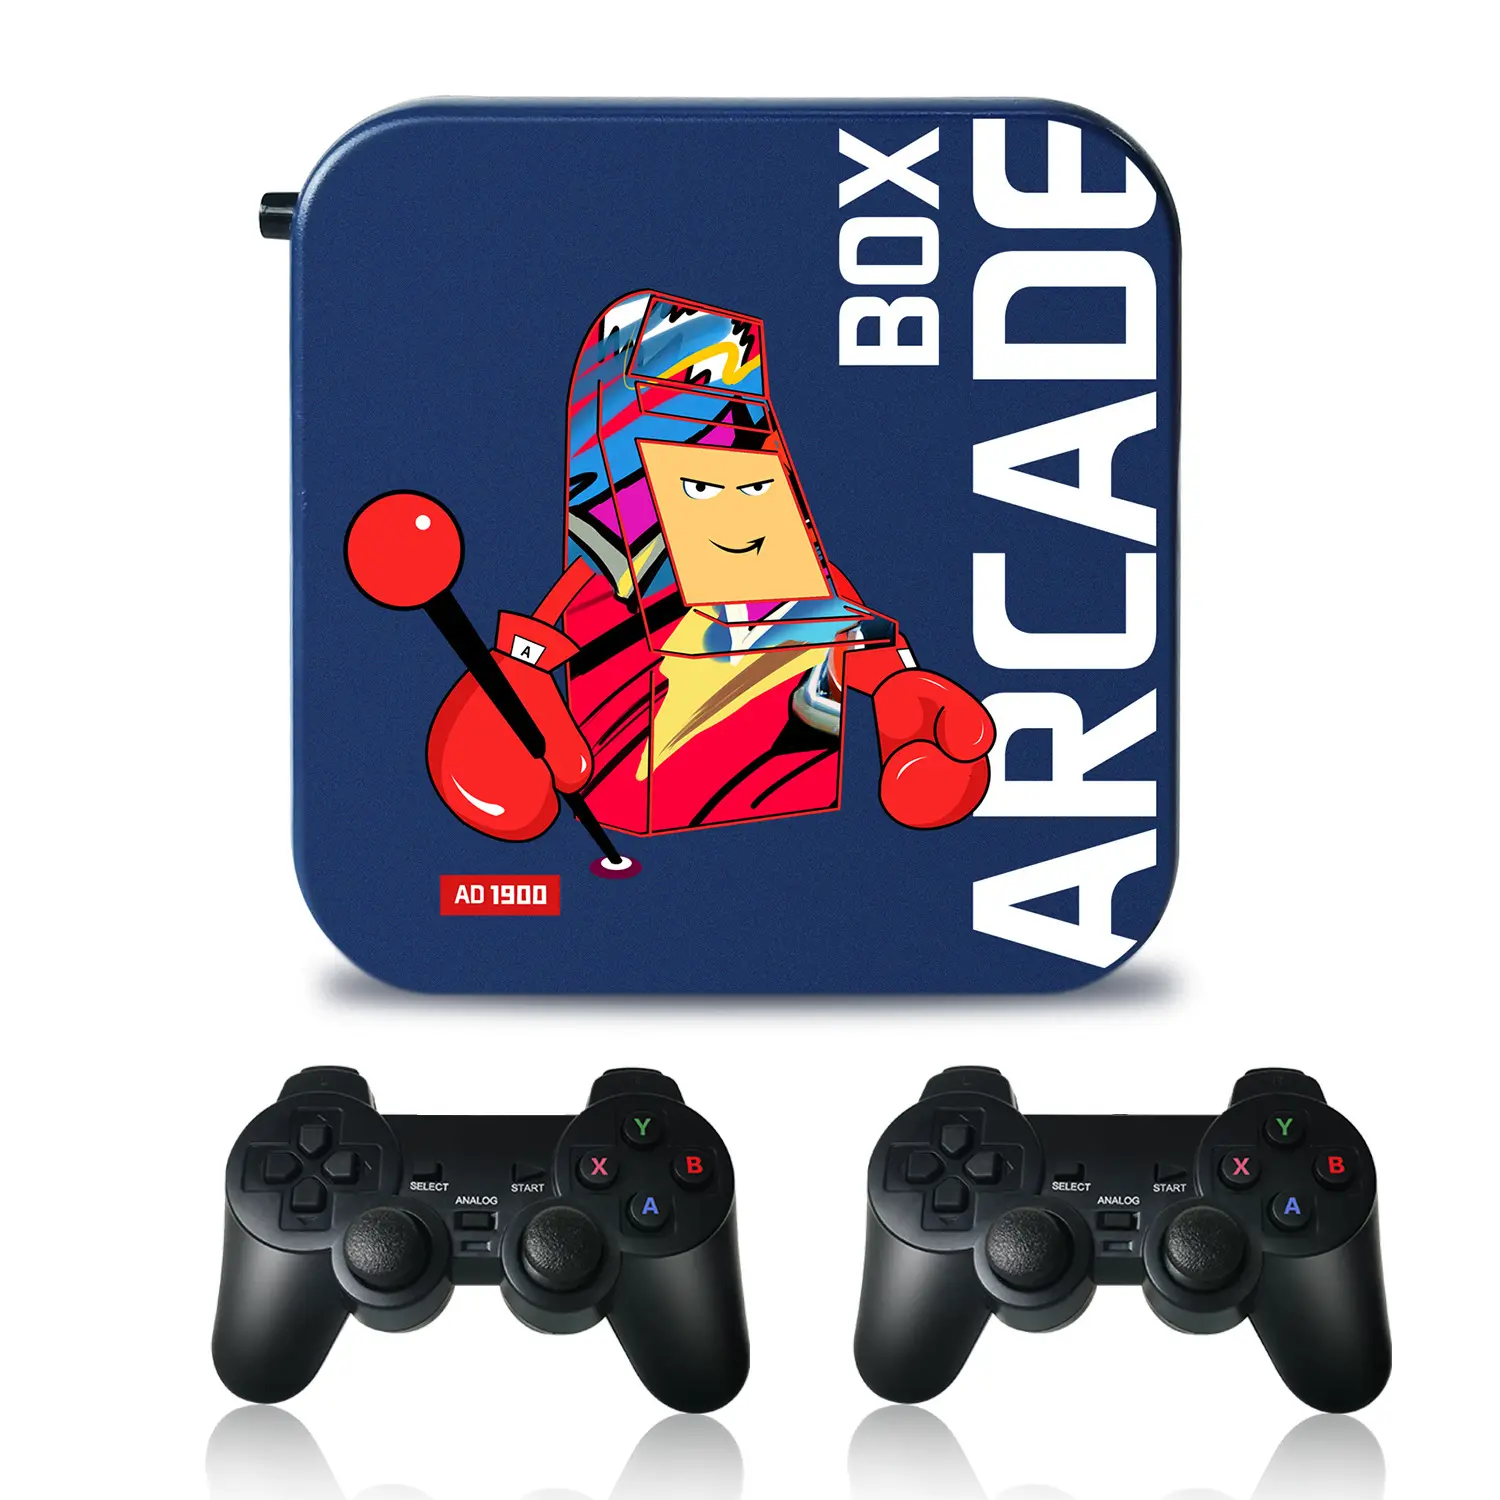 ARCADEBOXレトロTVクラシックゲームボックス外国貿易アーケードゲームコンソール4Kは64ビットHD出力ACビデオゲームコンソールをサポート